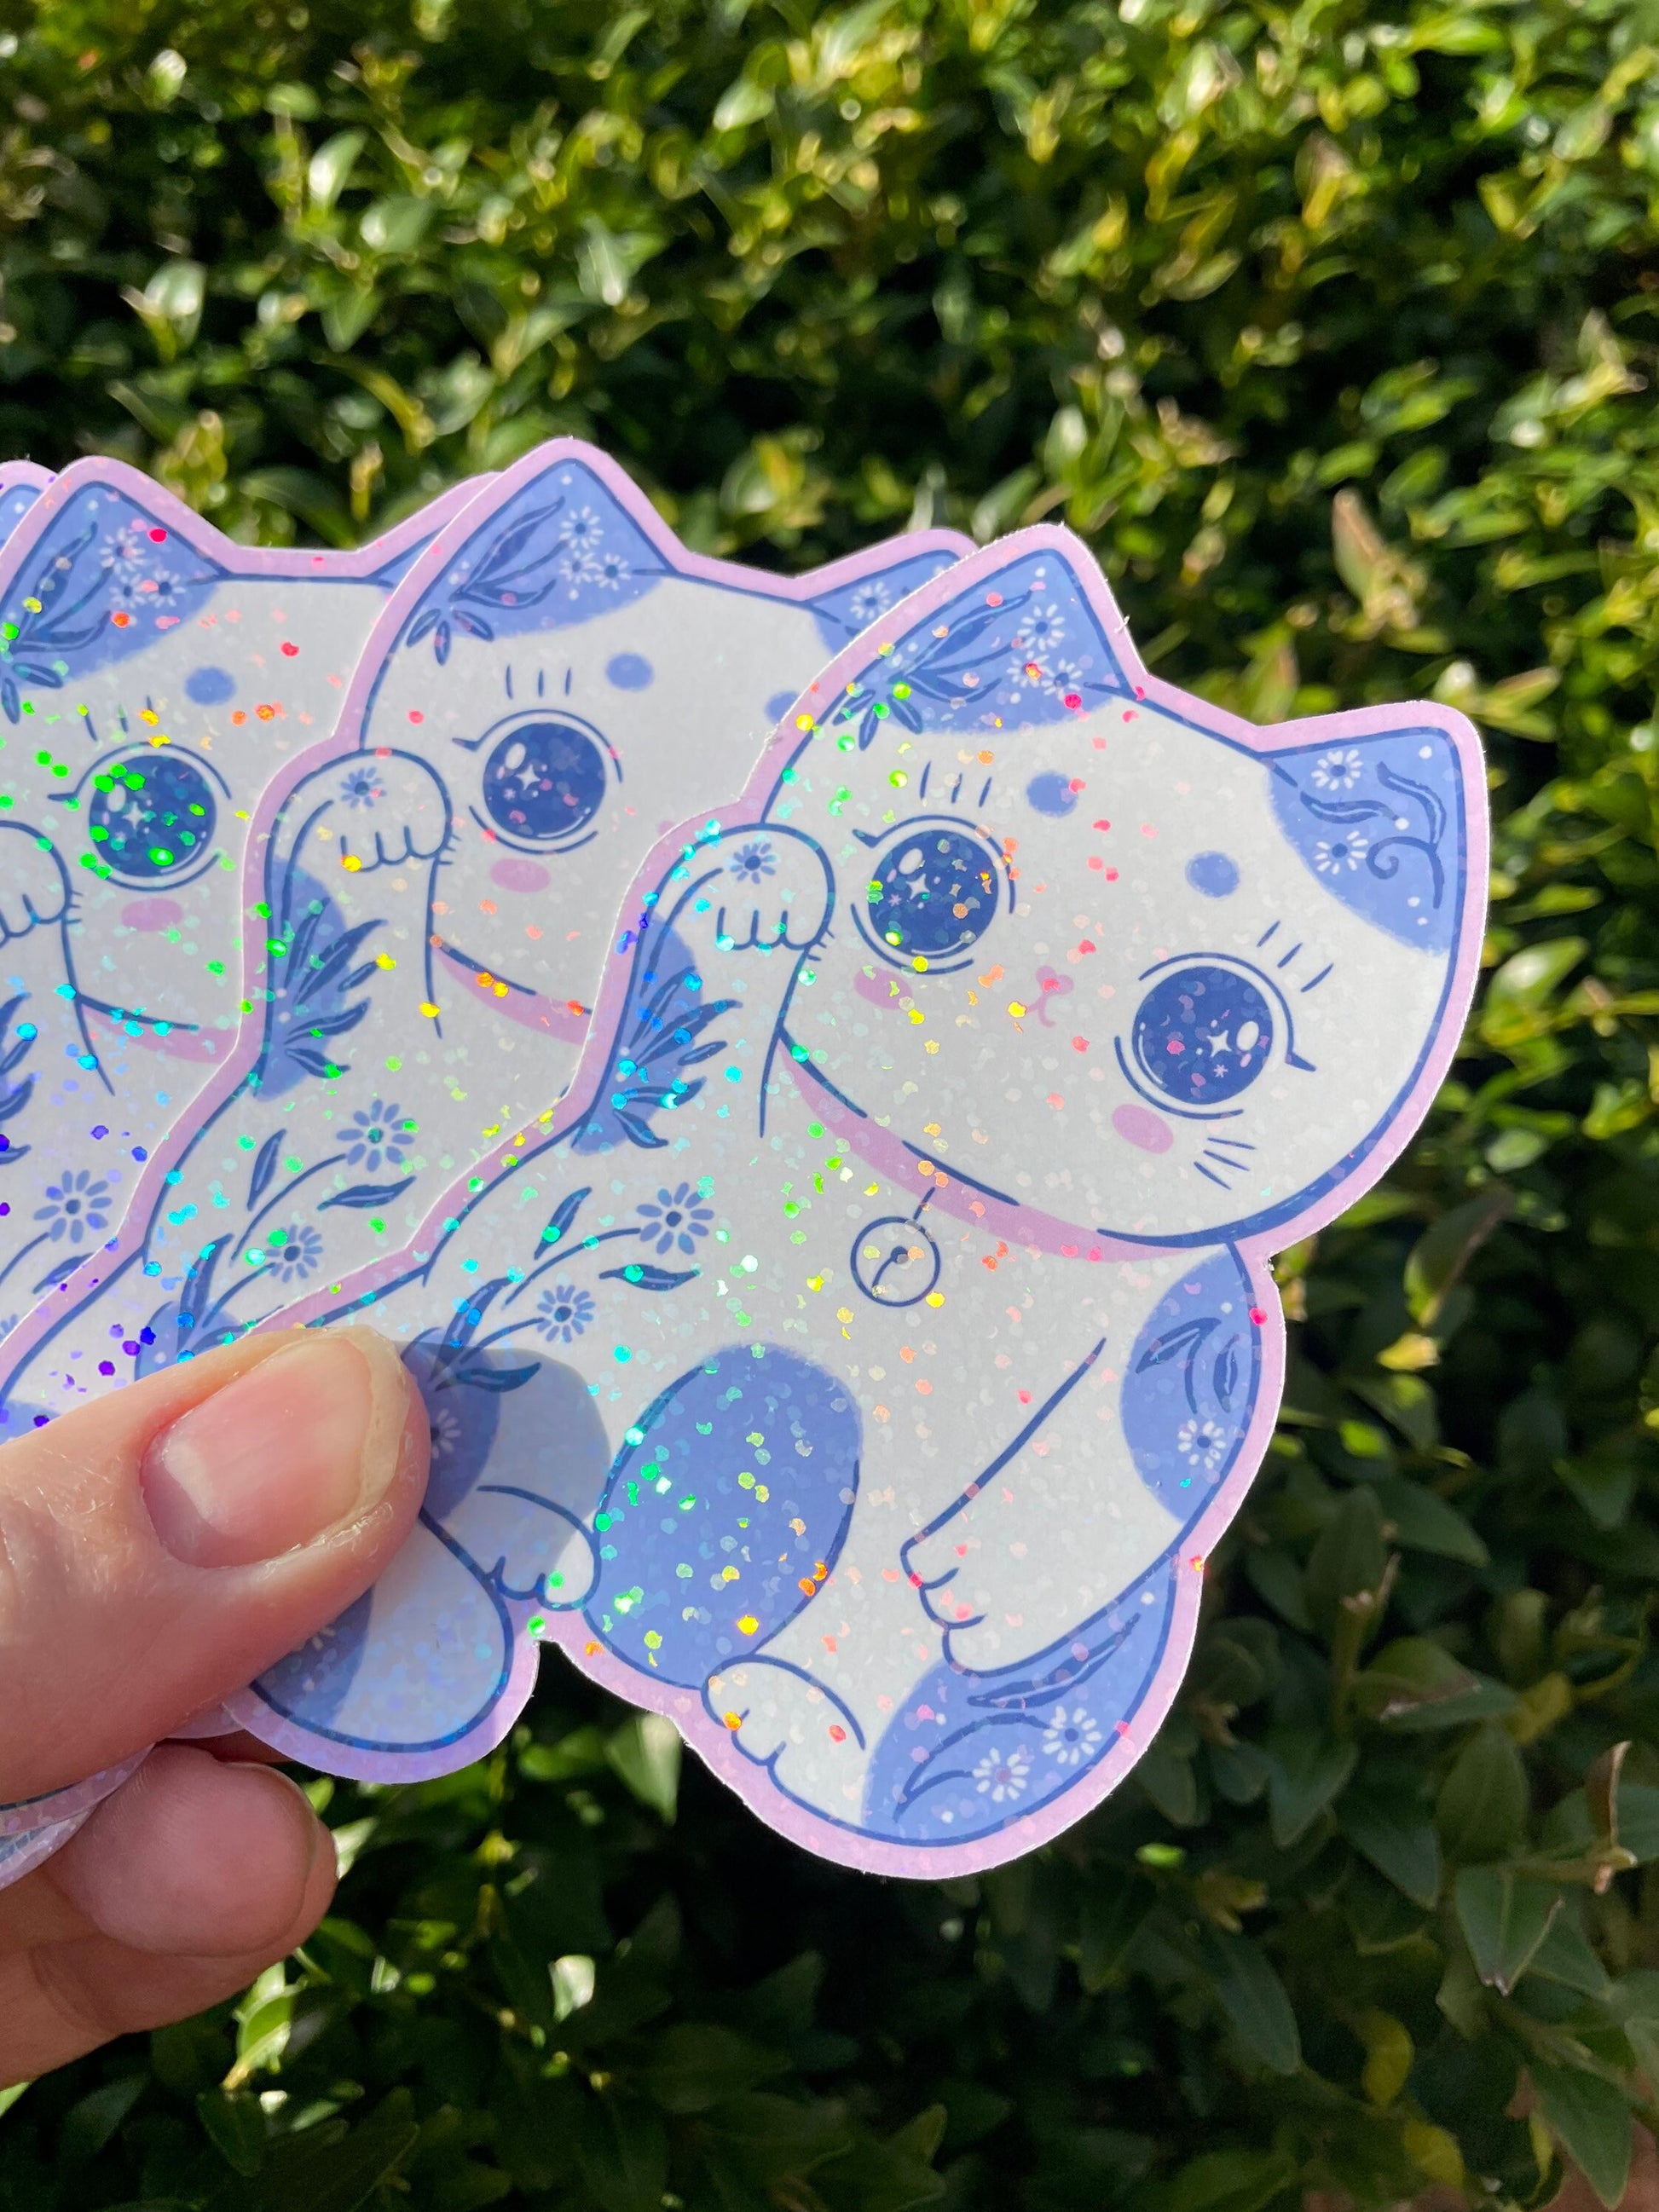 Super Sparkly holographic vinyl sticker in lucky cat design